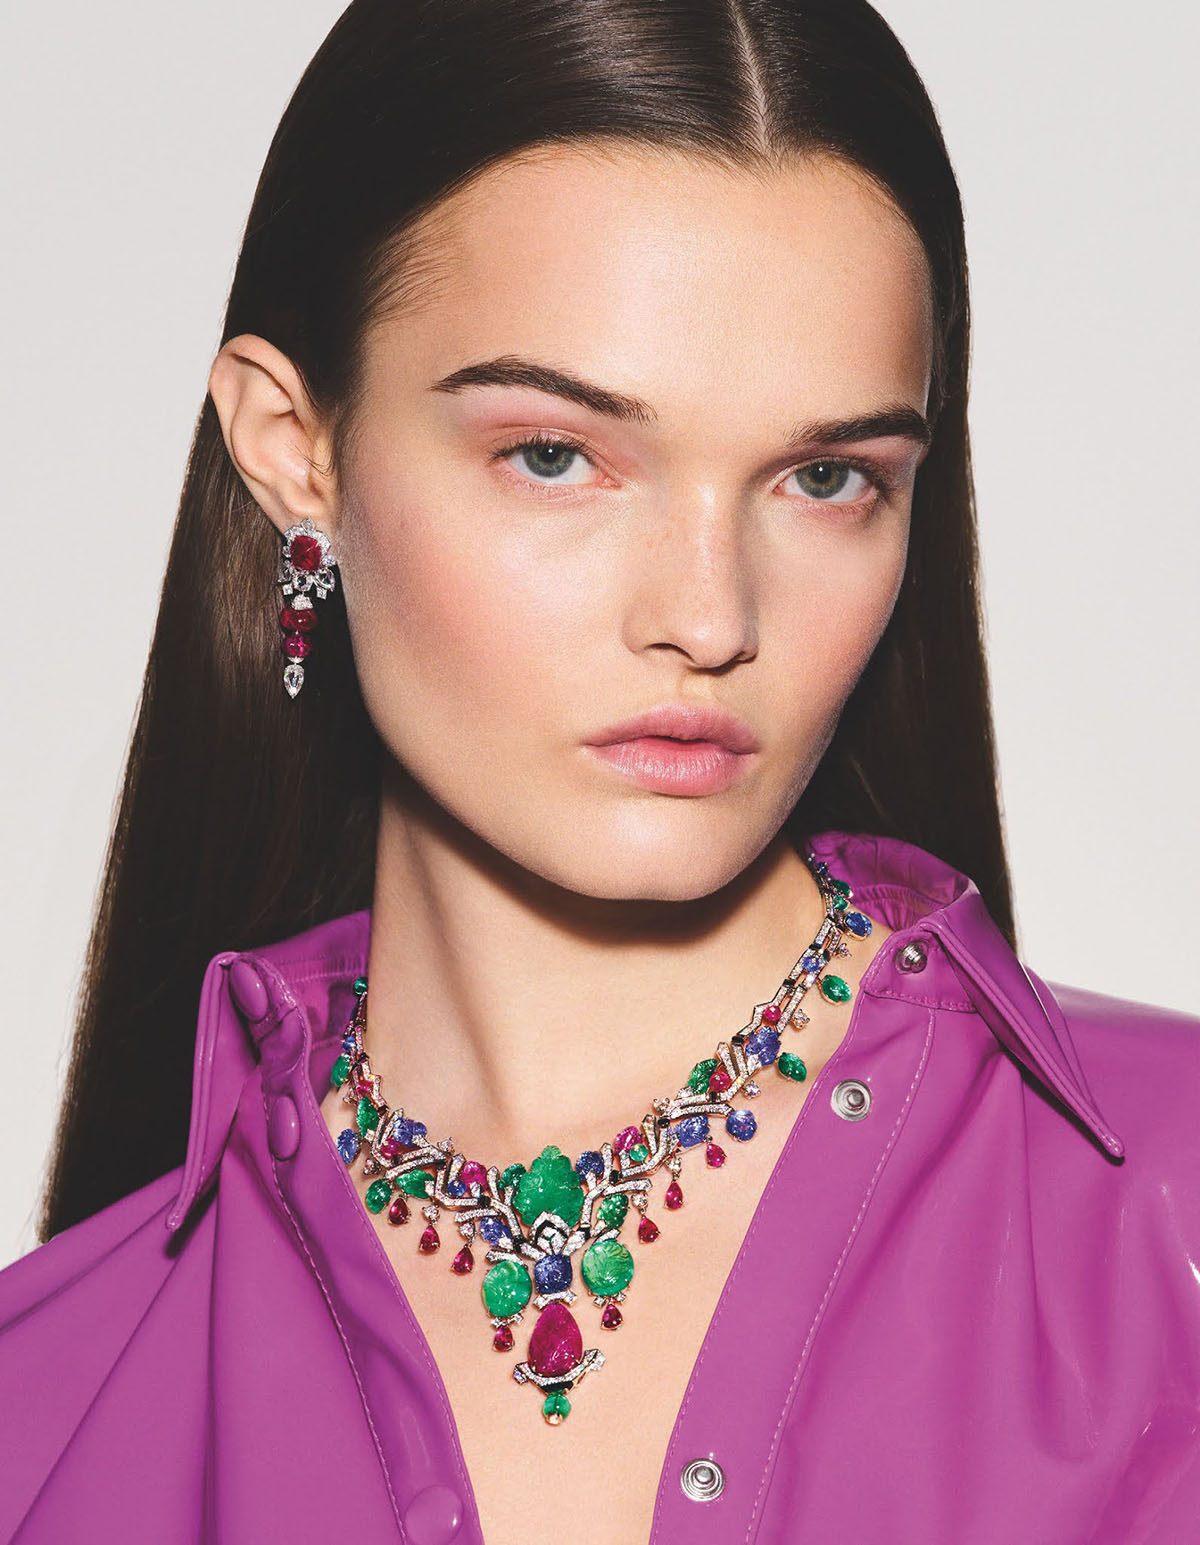 Lulu Tenney covers British Vogue Jewellery August 2021 by David Ferrua